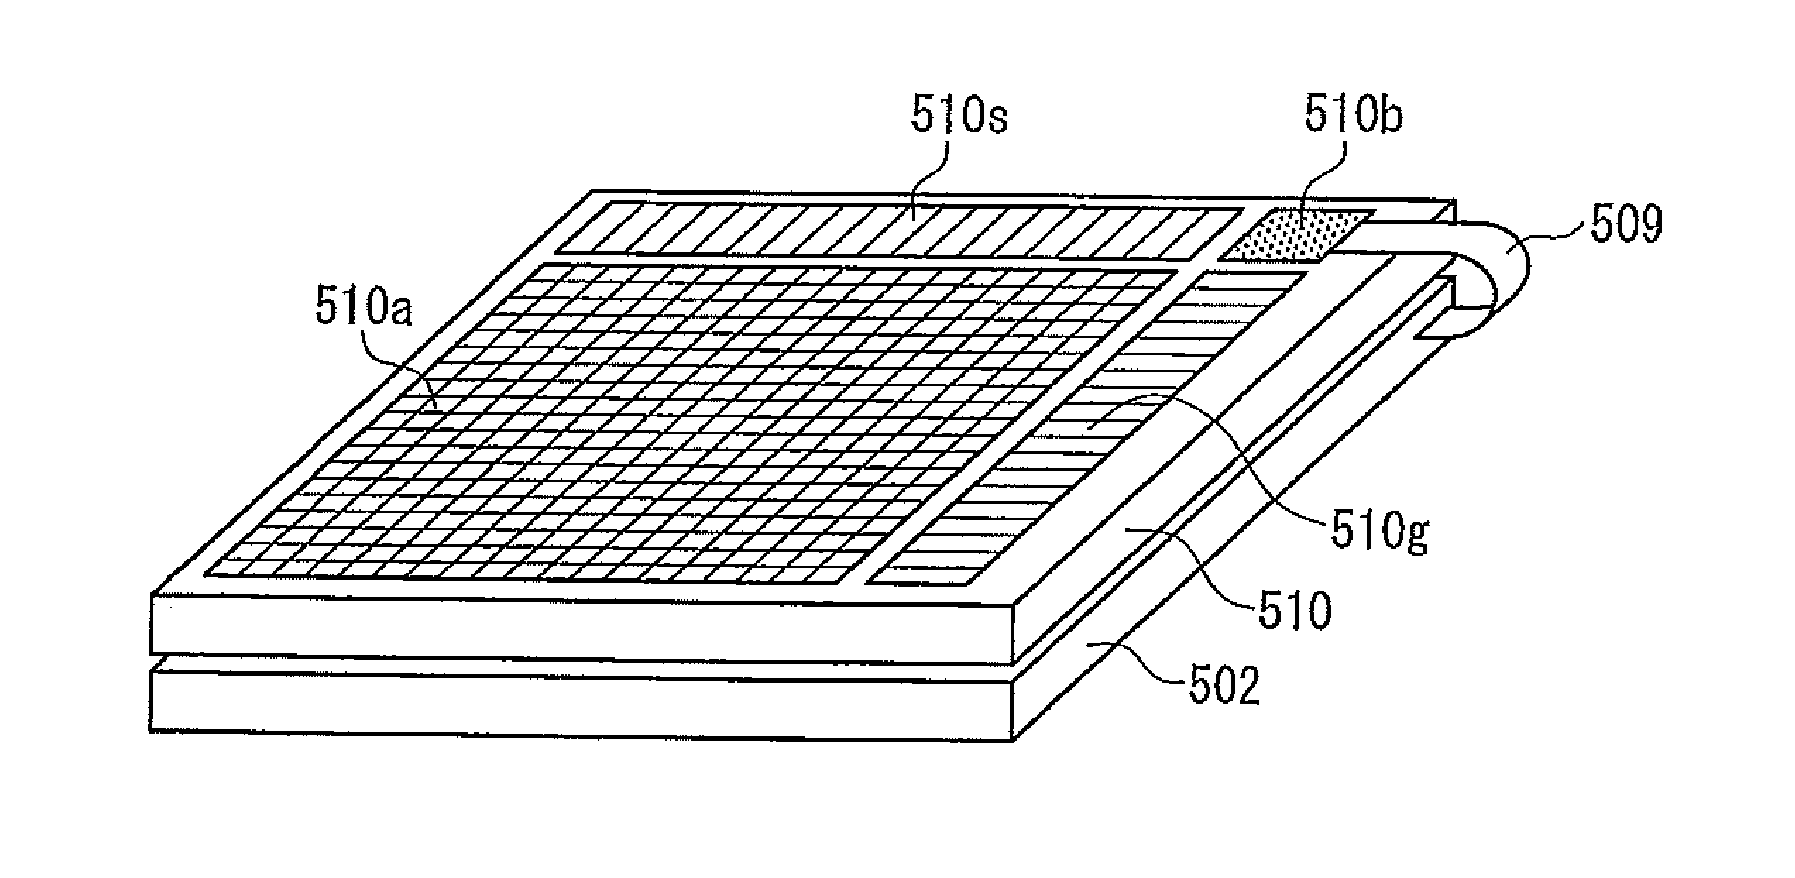 Photosensor, semiconductor device, and liquid crystal panel